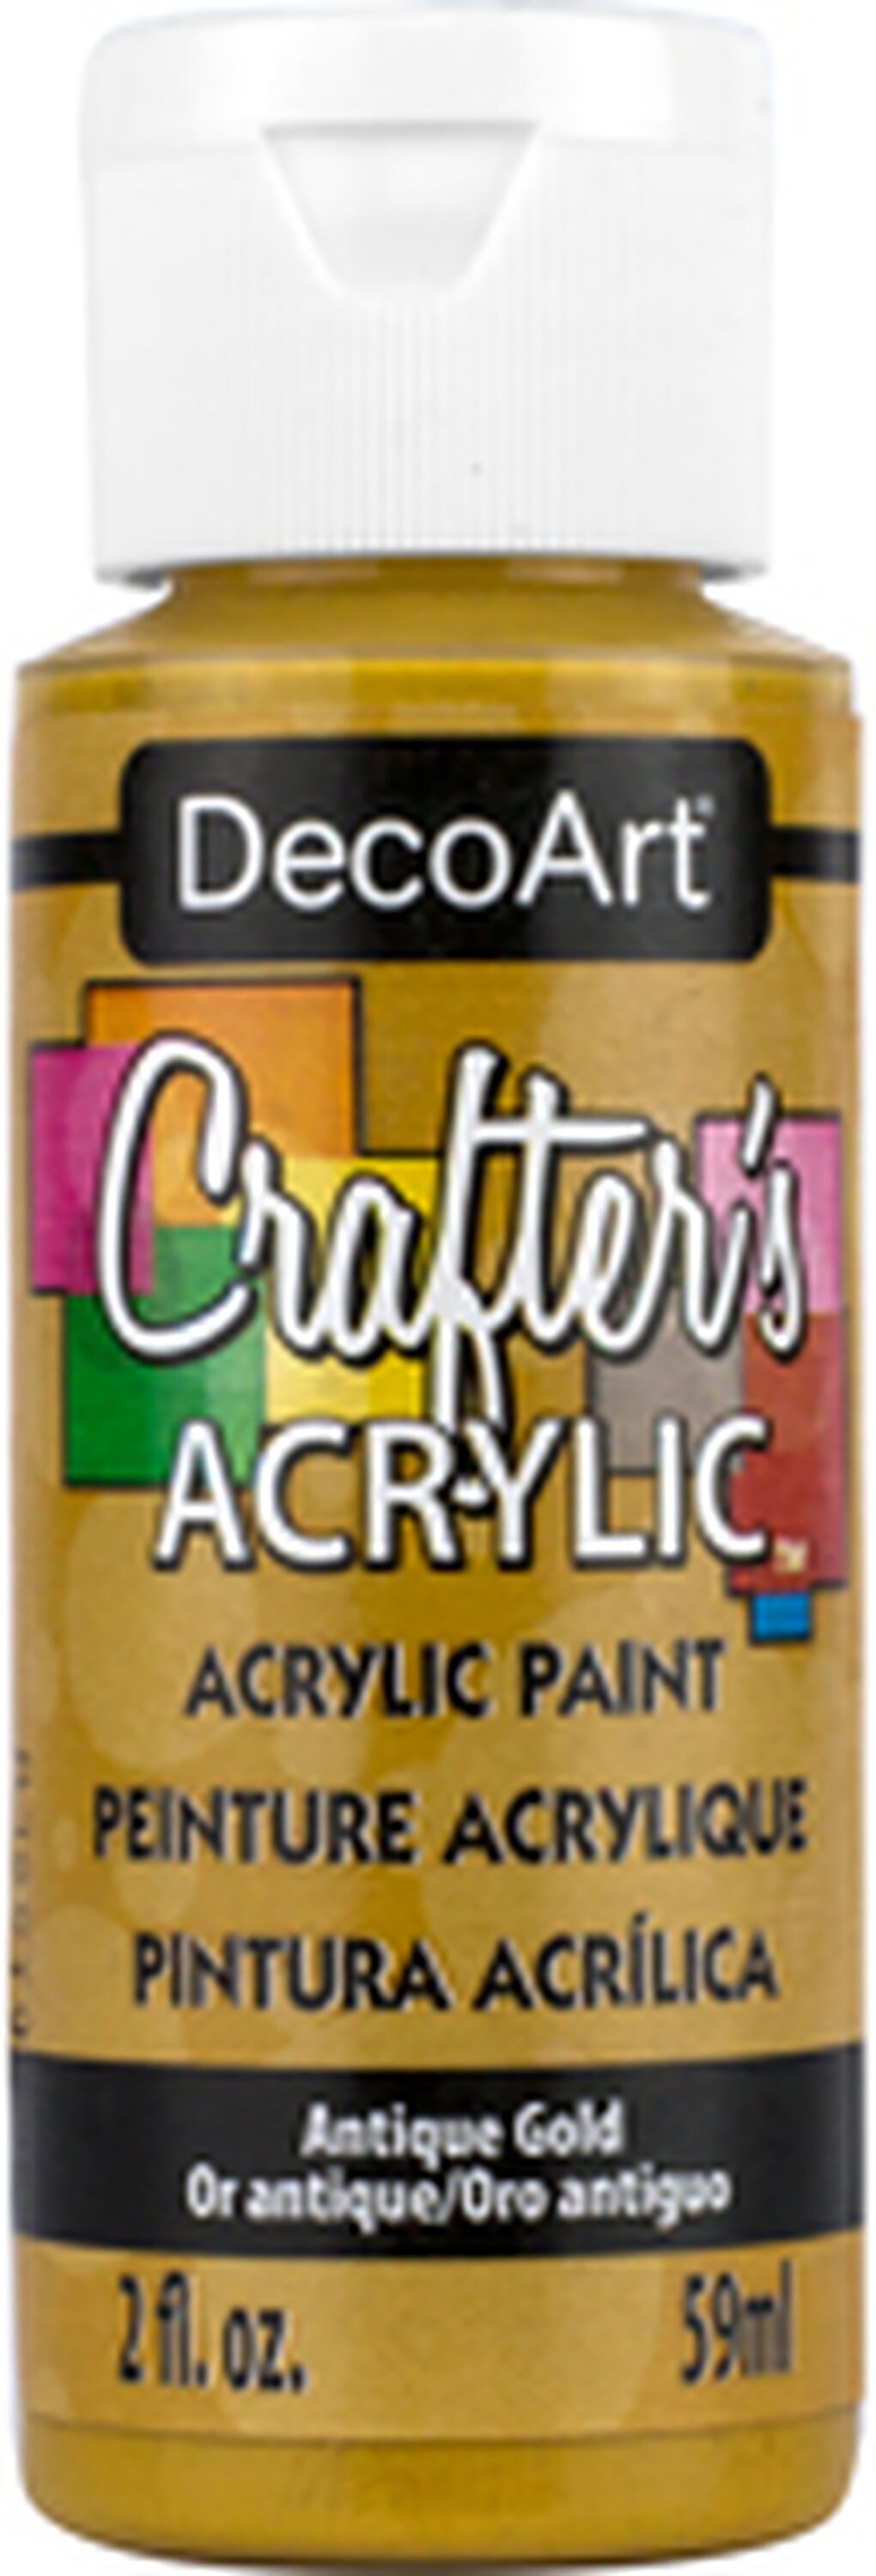 Decoart Crafters Acrylic Paint Light Green Tones 59ml 2oz Bottles Craft  Paints 